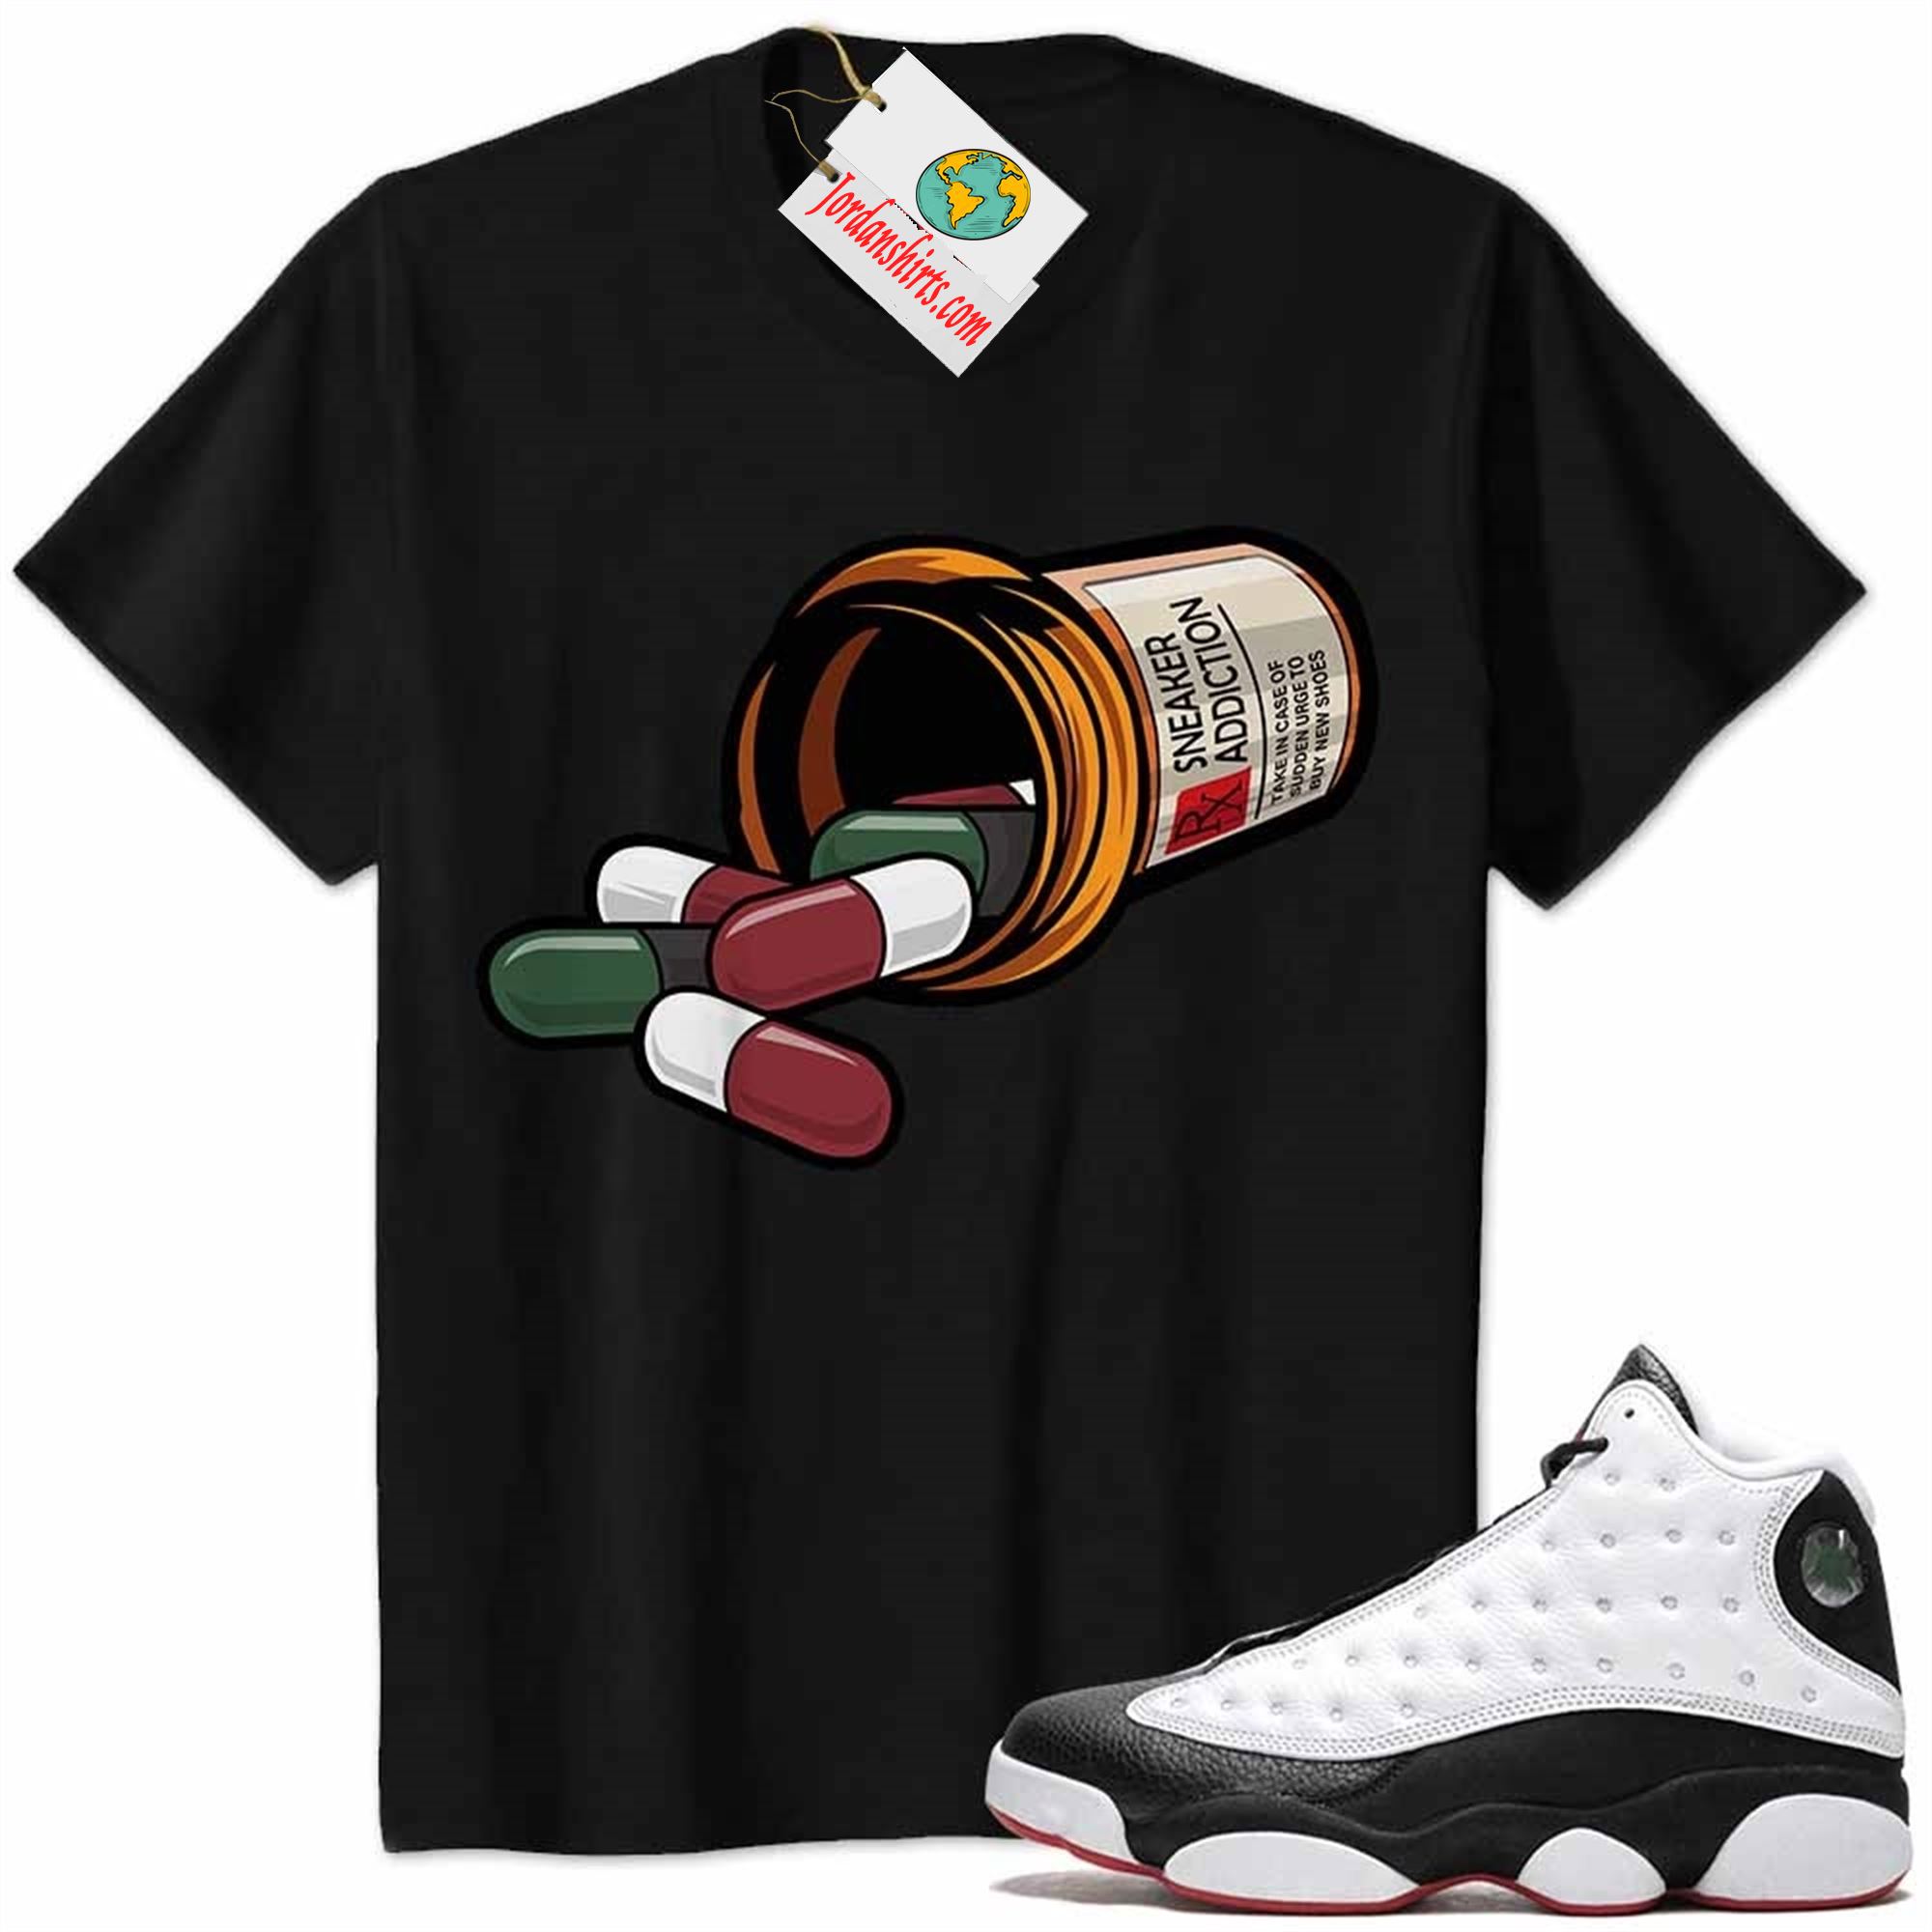 Jordan 13 Shirt, Rx Drugs Pill Bottle Sneaker Addiction Black Air Jordan 13 He Got Game 13s Full Size Up To 5xl